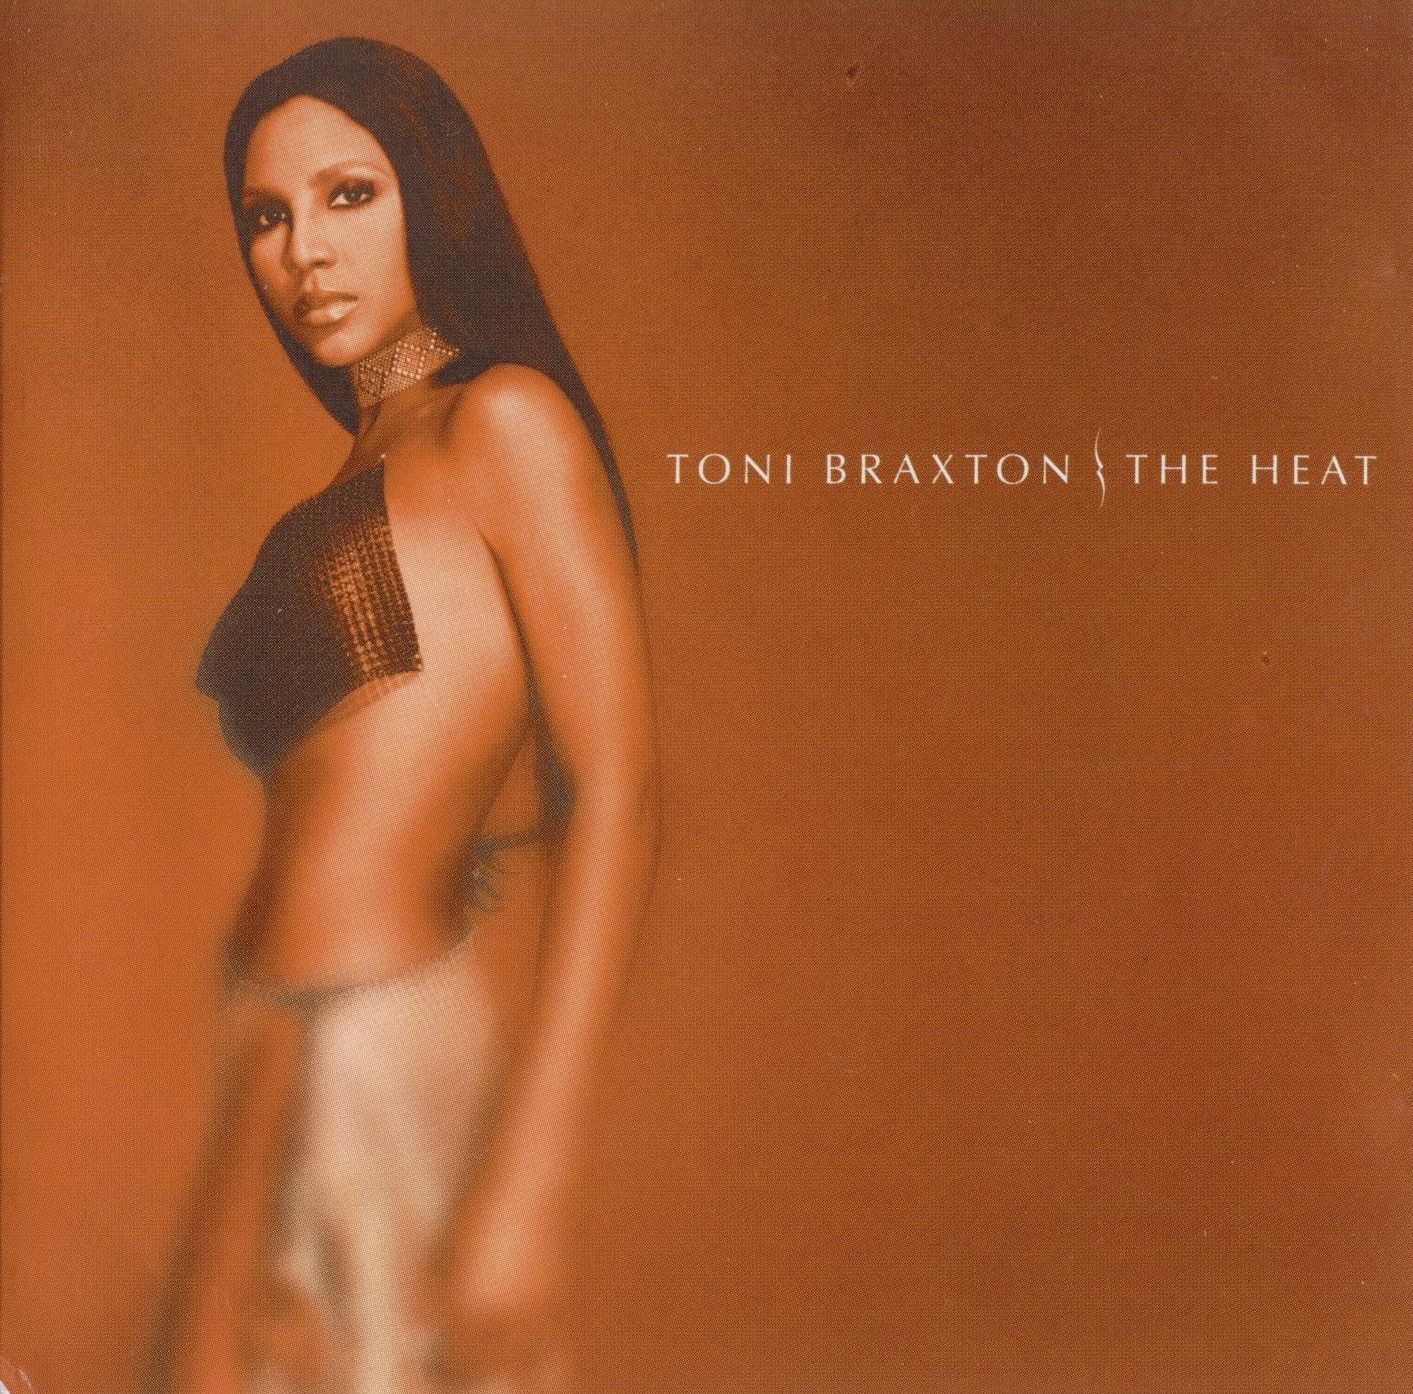 Tony Braxton - Collection (1993-2020)